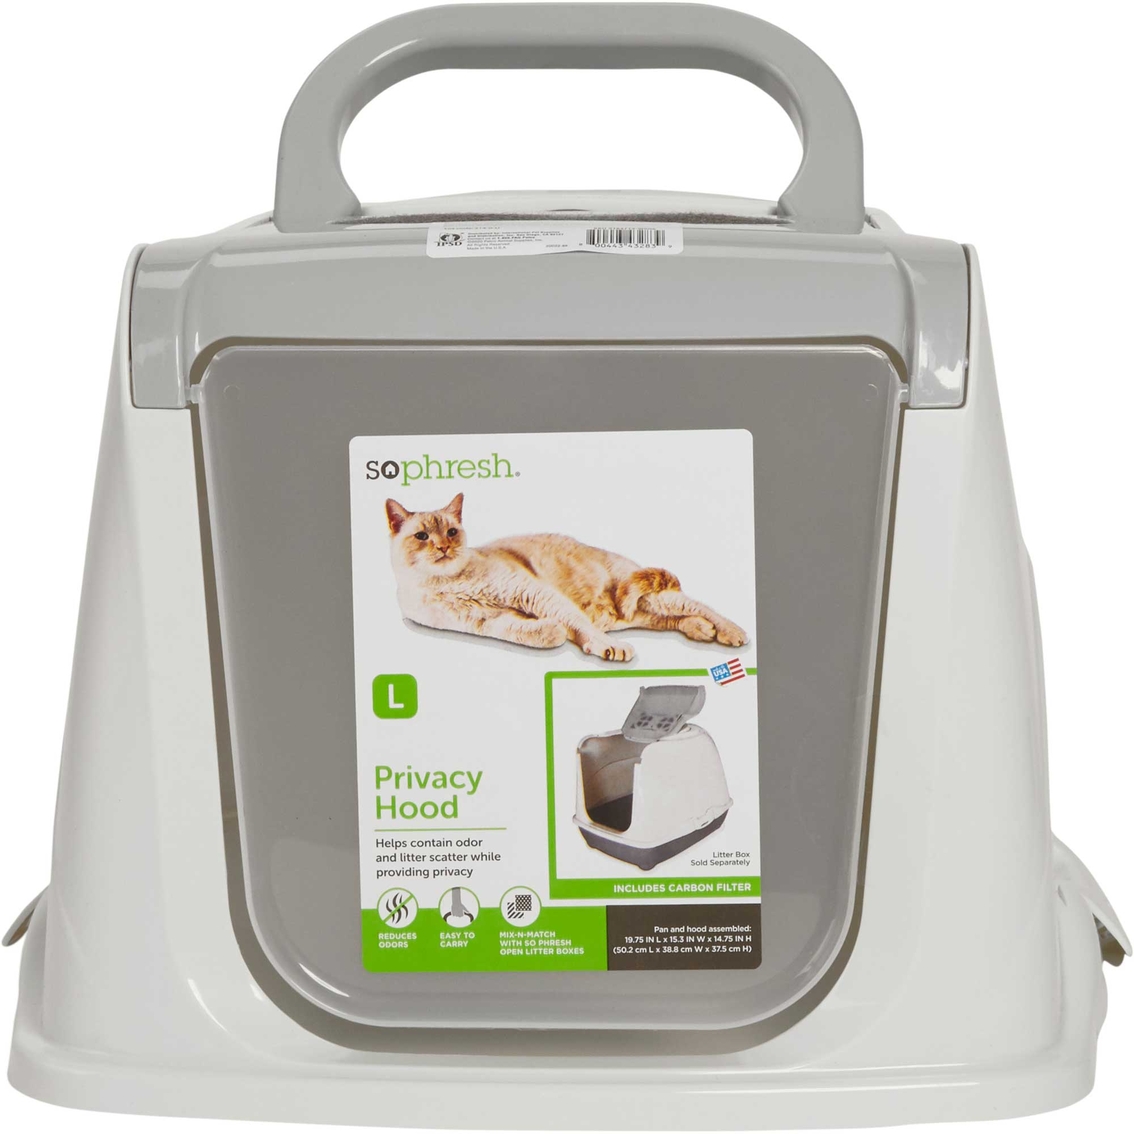 So Phresh White Flip Top Cat Litter Box Hood, 19.7 in. L x 15.3 in. W x 10.5 in. H - Image 2 of 3